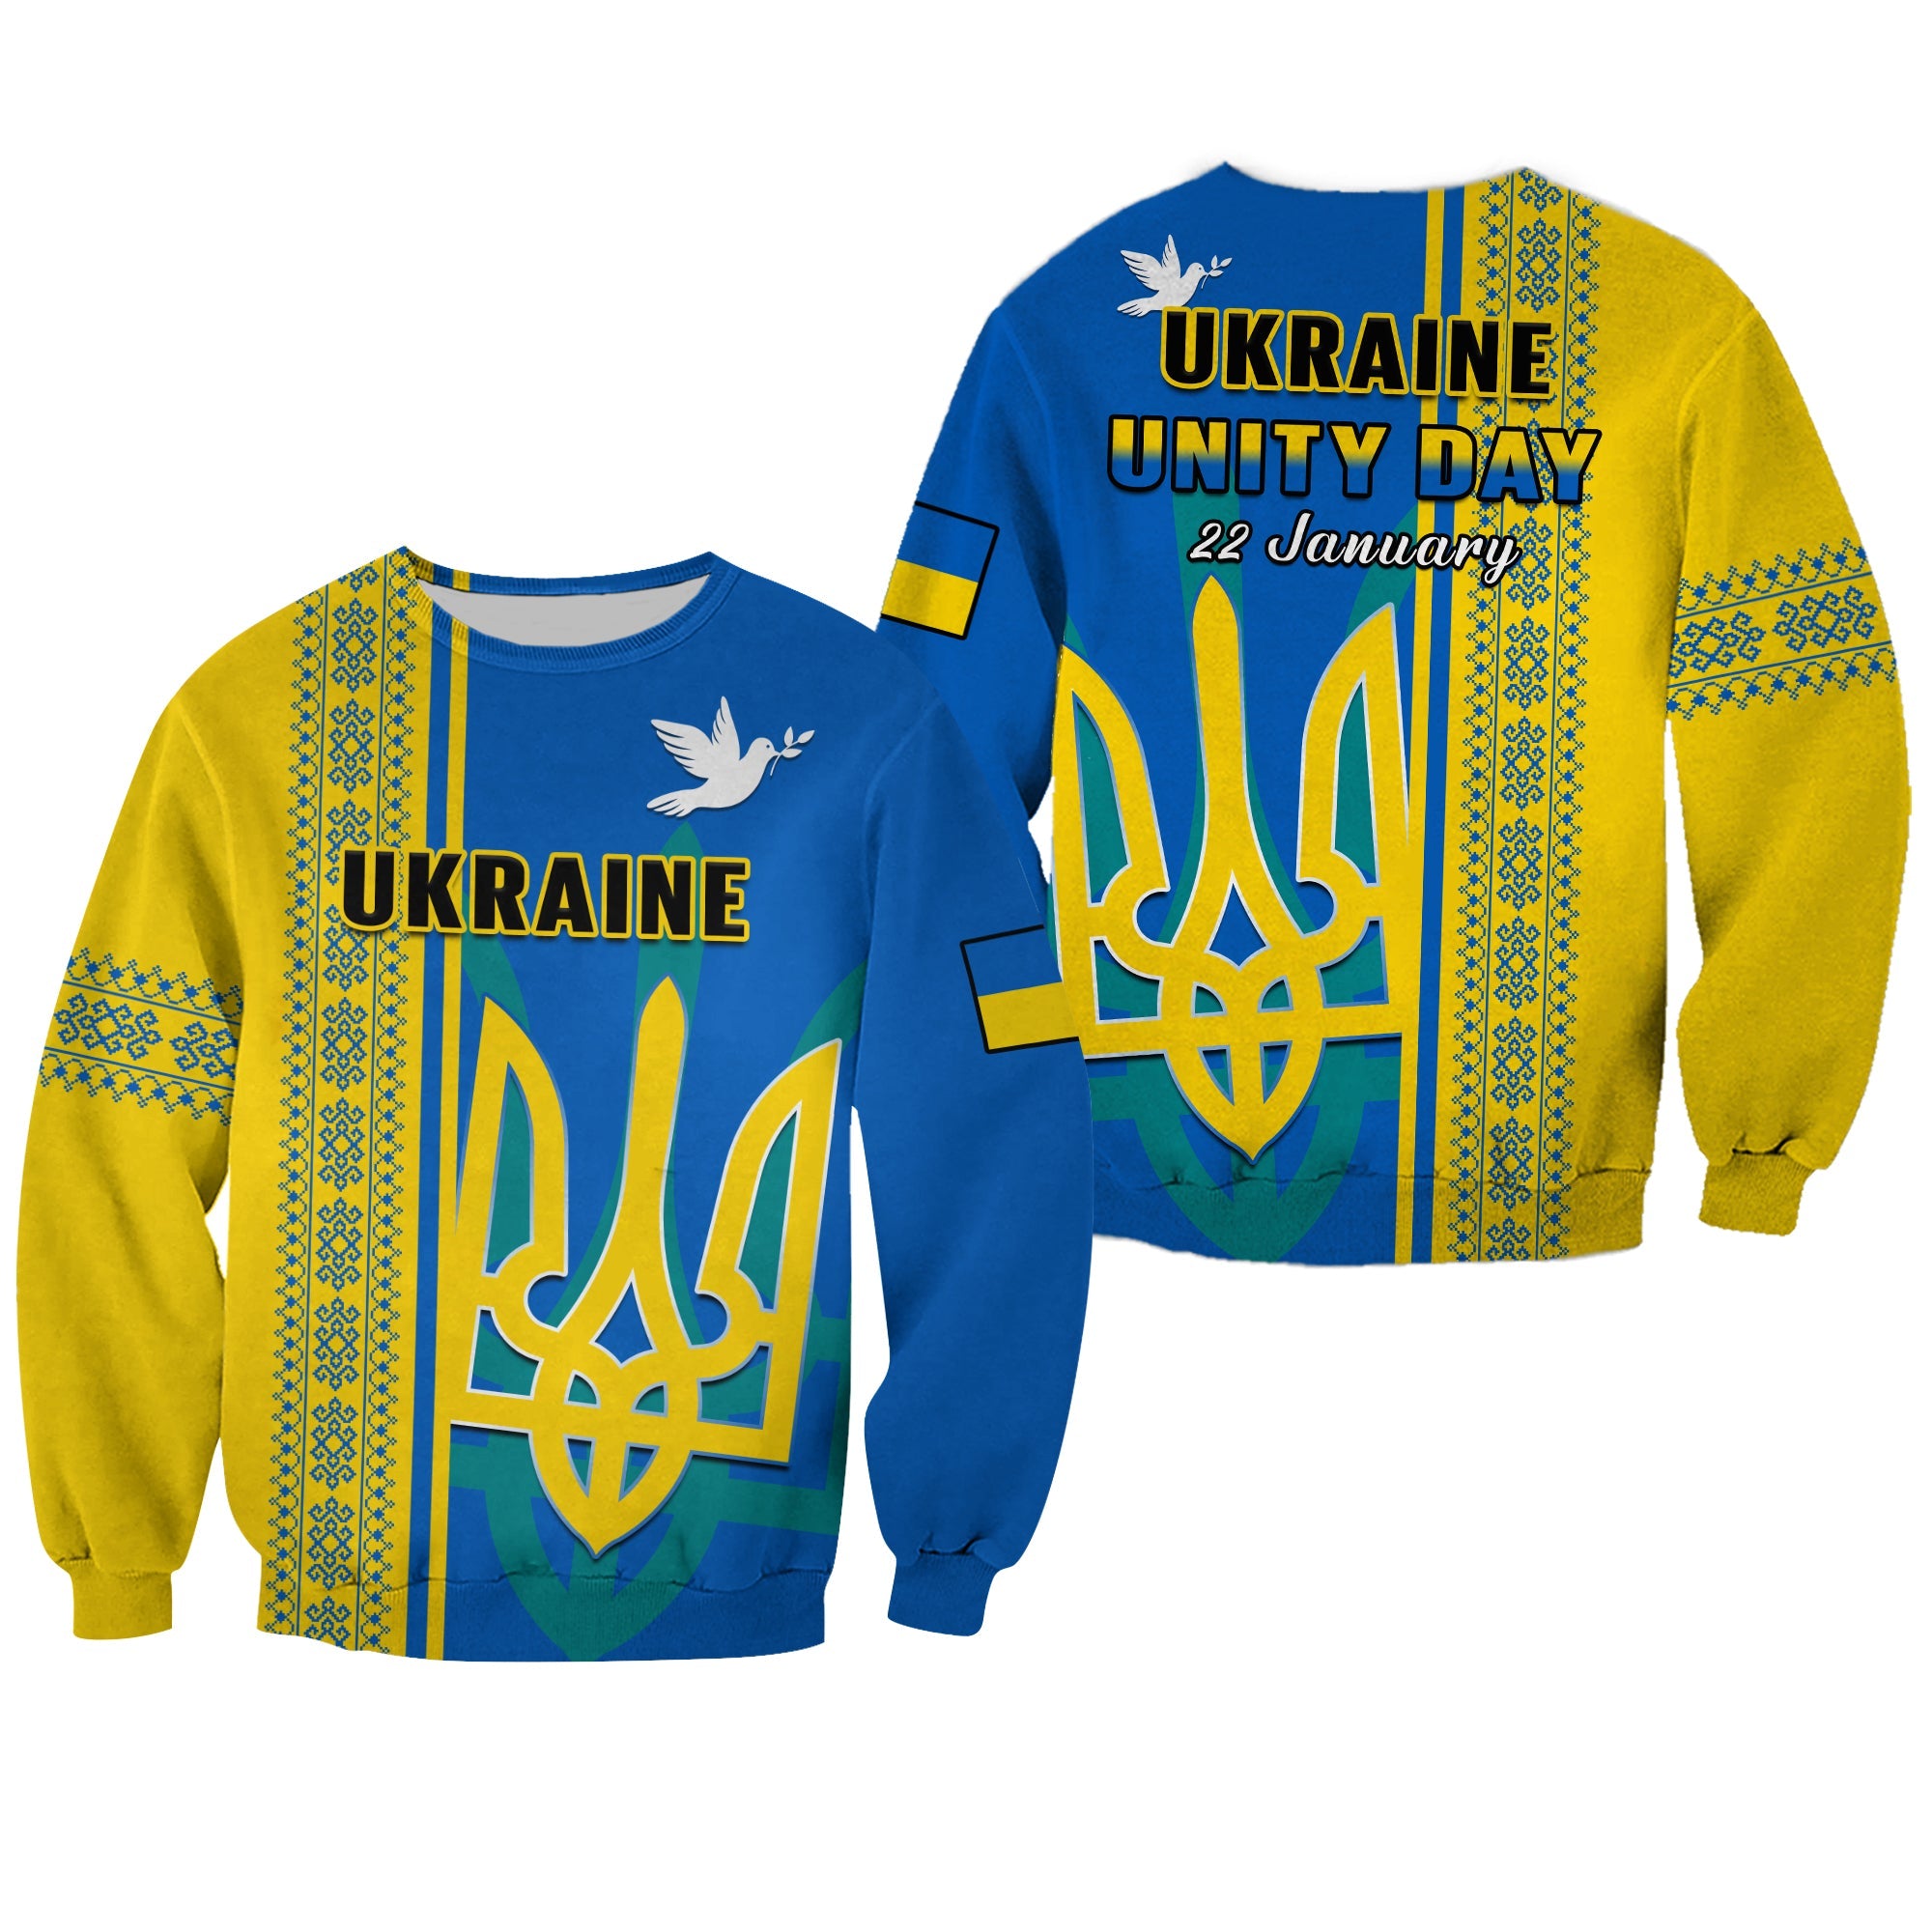 ukraine-unity-day-sweatshirt-vyshyvanka-ukrainian-coat-of-arms